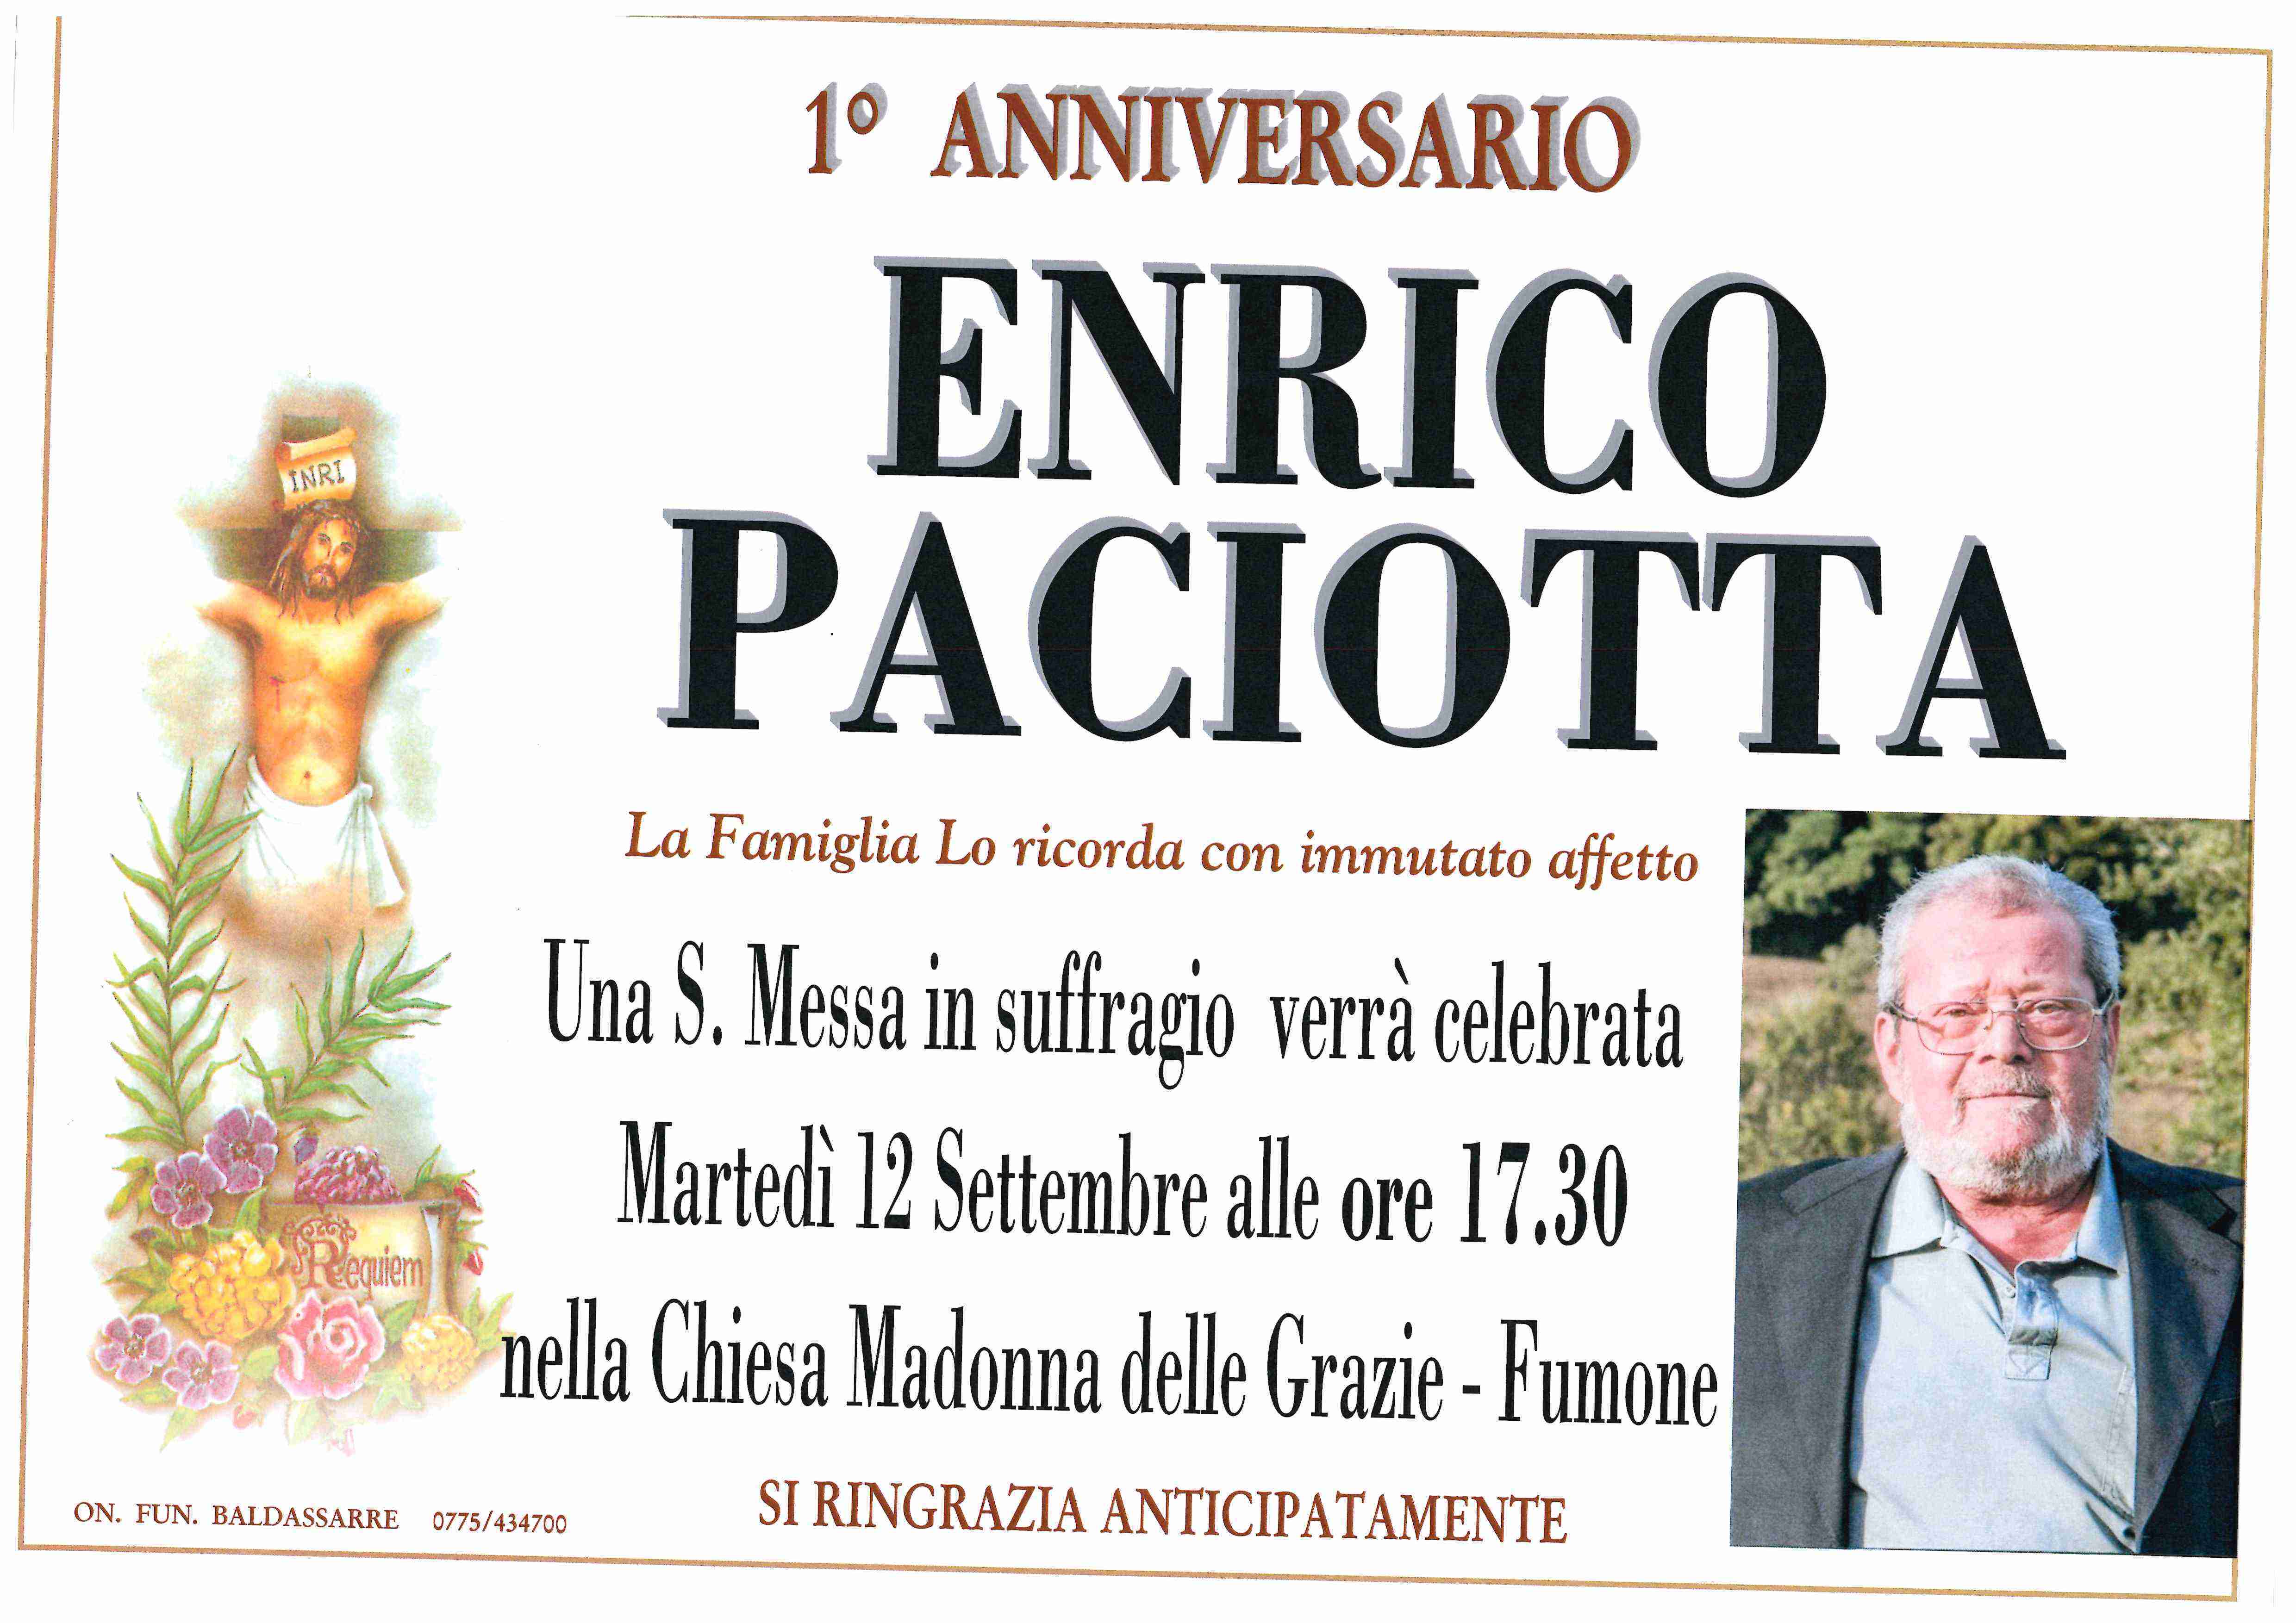 Enrico Paciotta